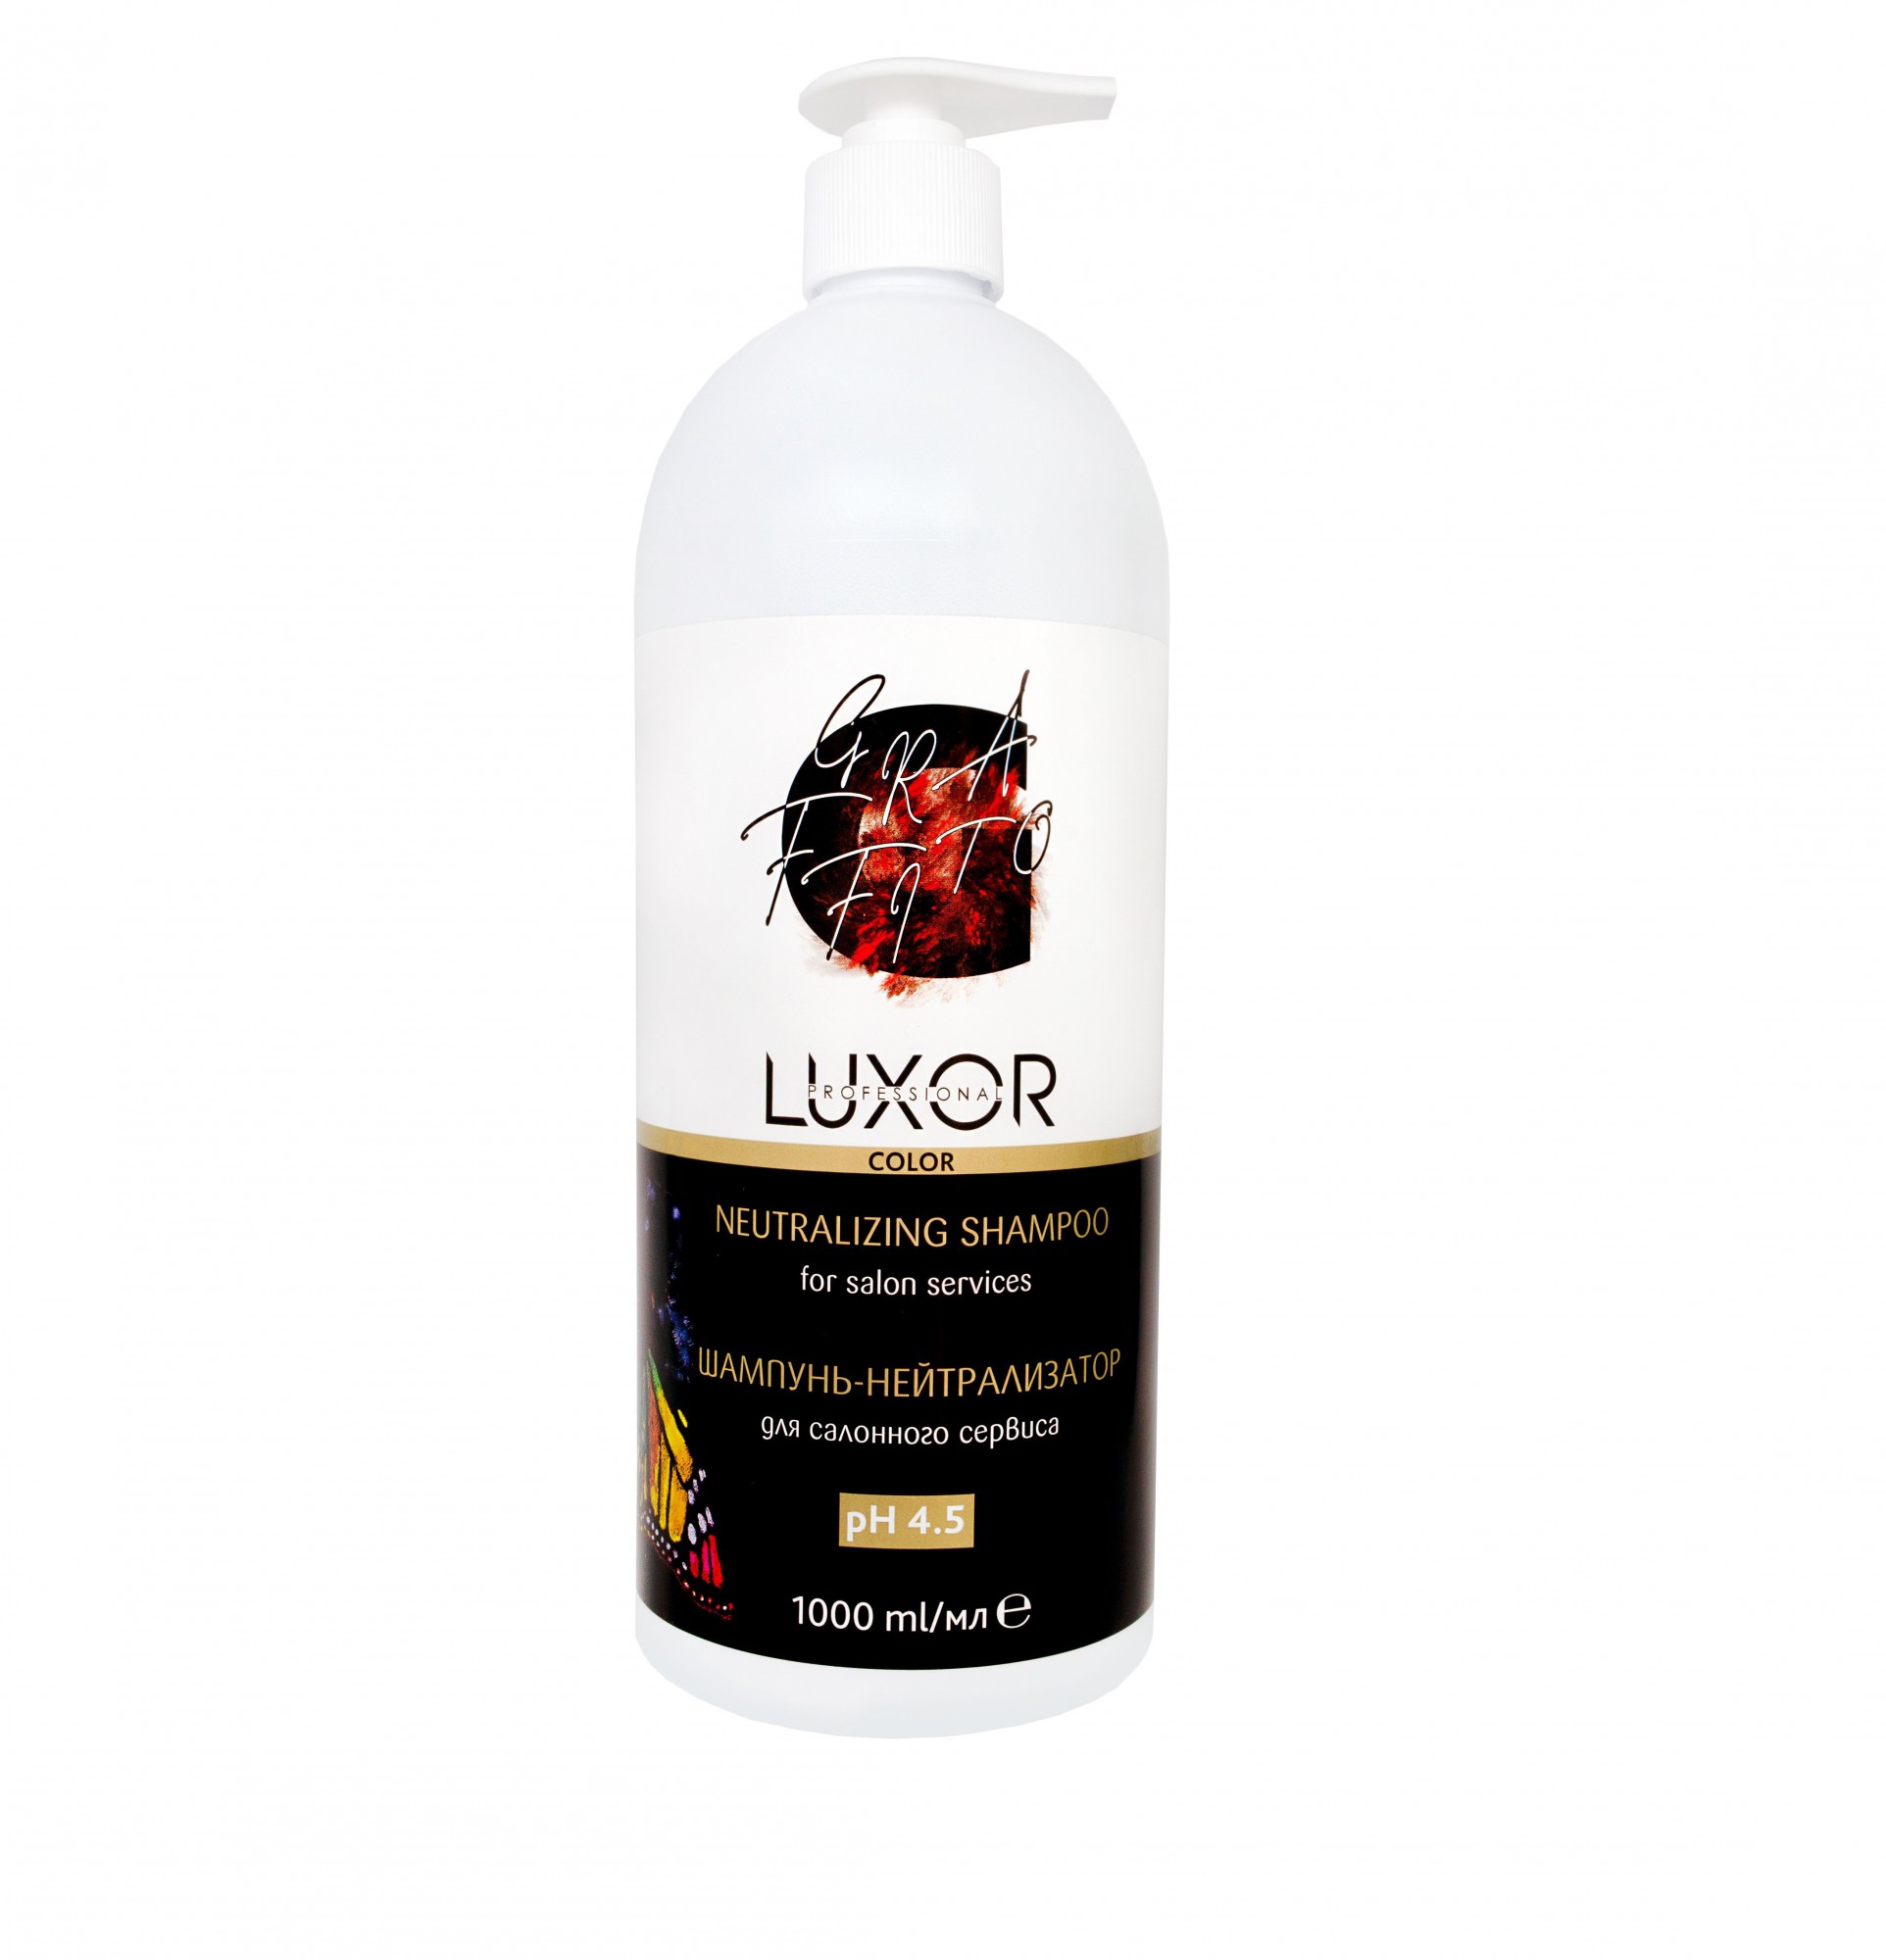 Шампунь-Нейтрализат Luxor Professional Neutralizing Shampoo после Окрашивания рН 4.5 10